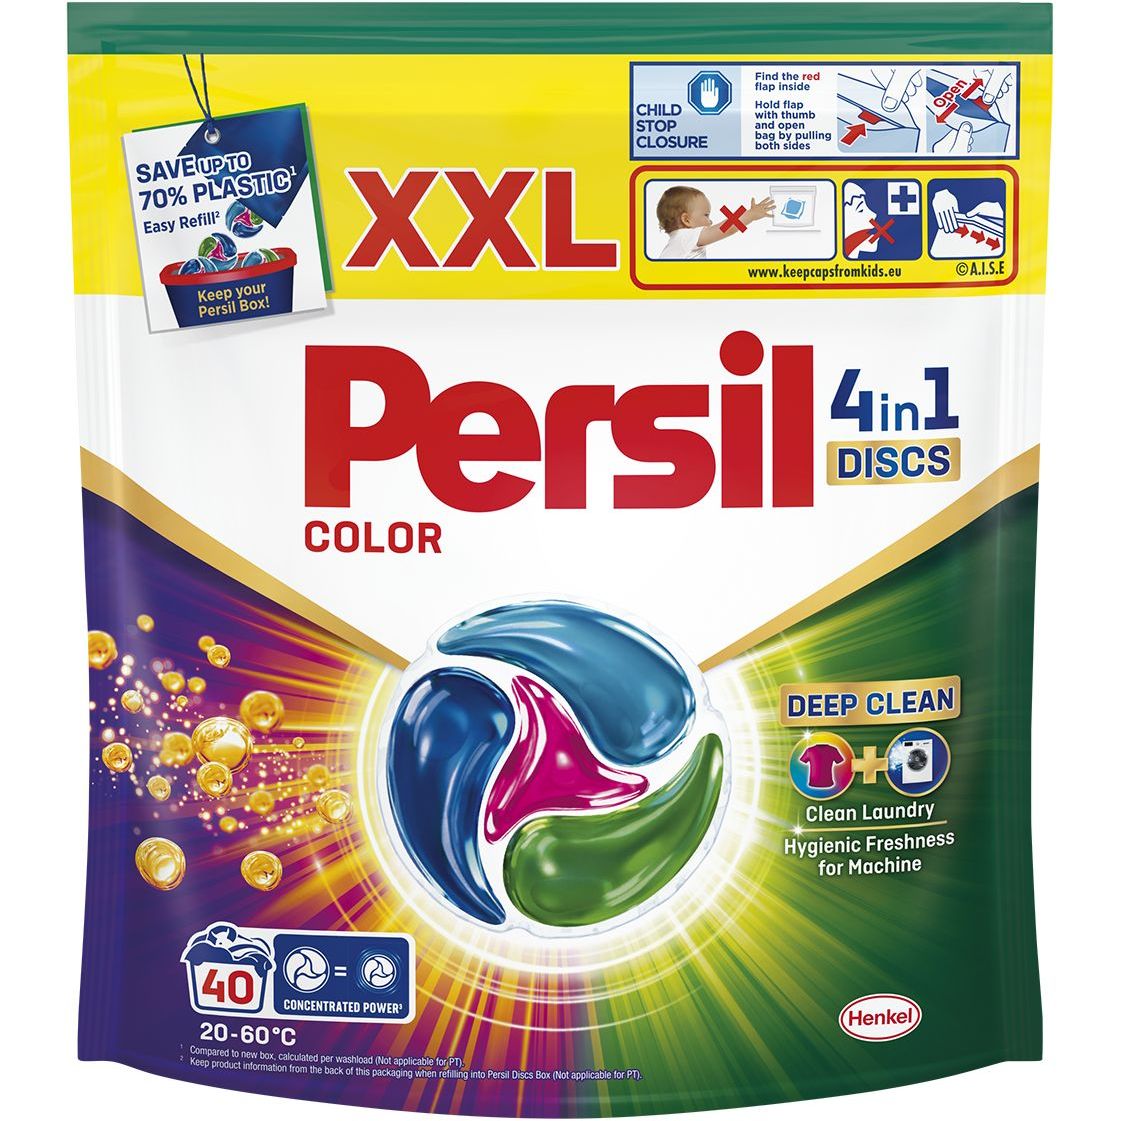 Диски для прання Persil Deep Clean Color 4 in 1 Discs 40 шт. - фото 1